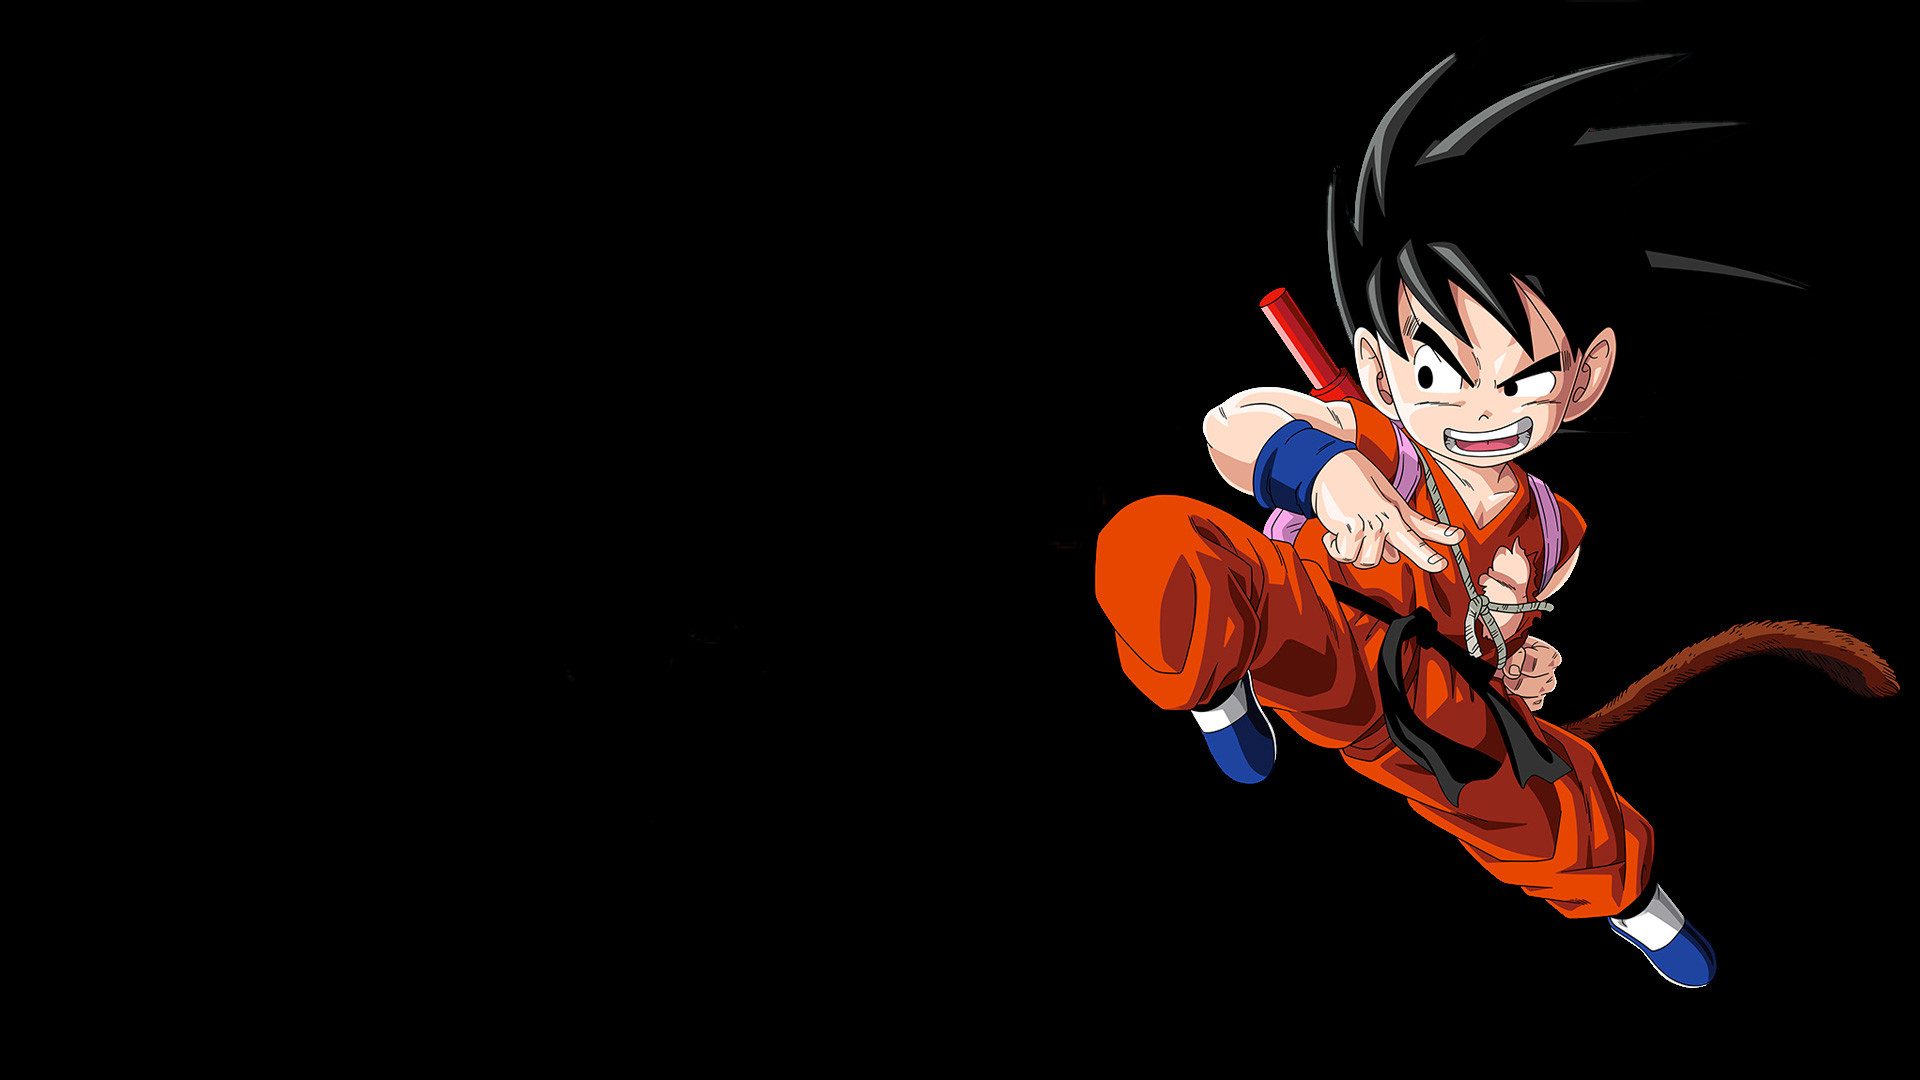 Best Images On Pinterest Goku Dragon Ball And Dragon Ball